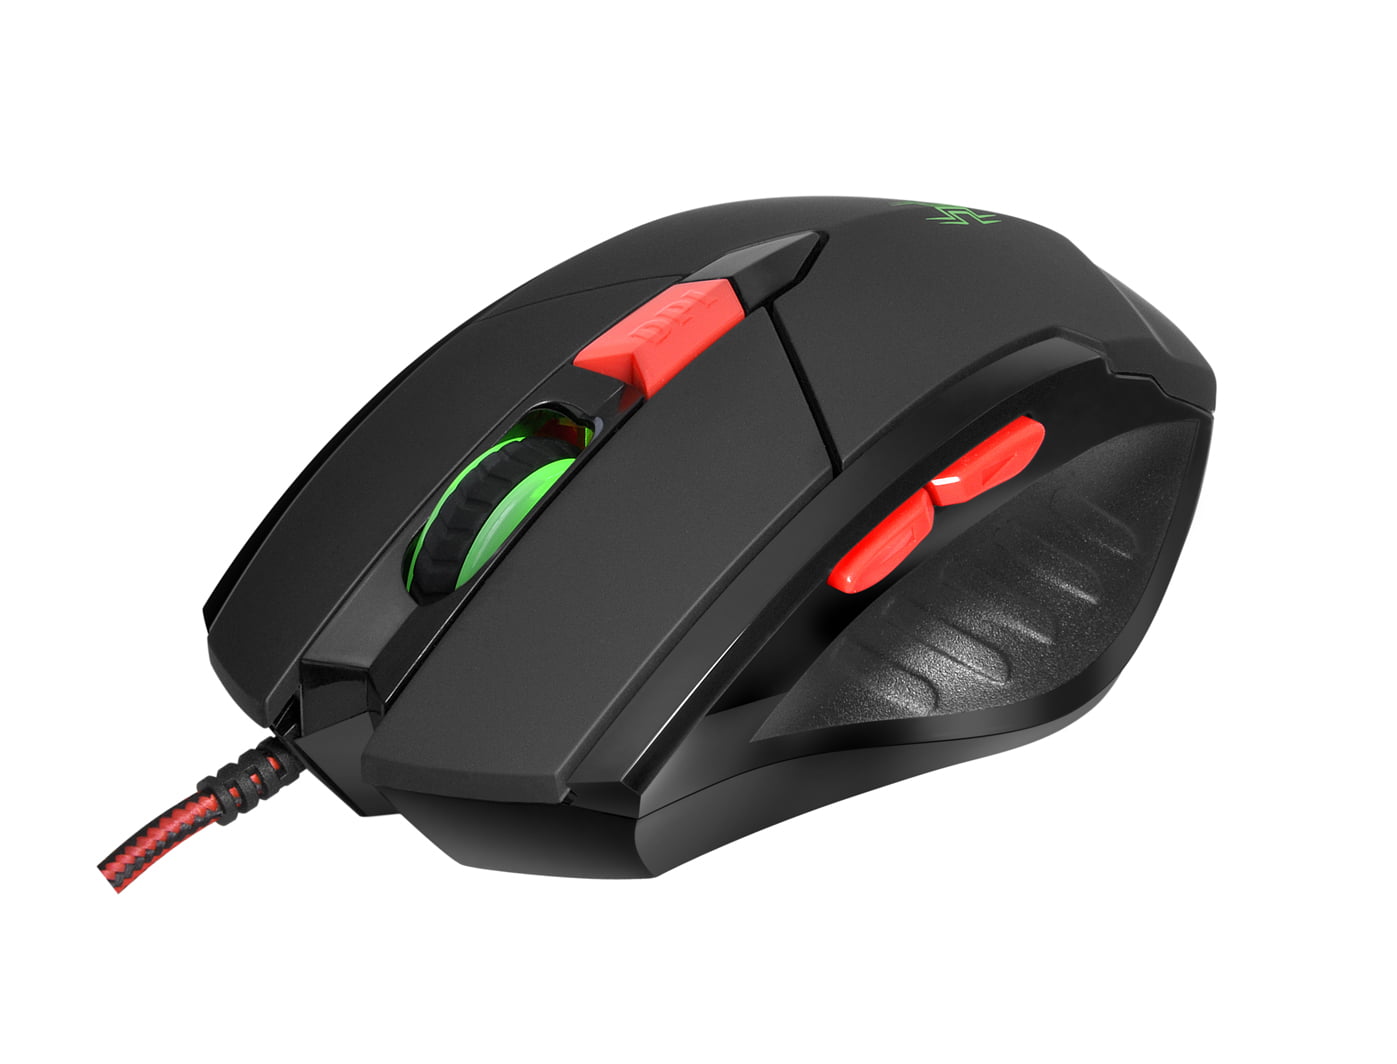 Lihat Harga 7 Button Wired Gaming Mouse (Black) - Intl di 